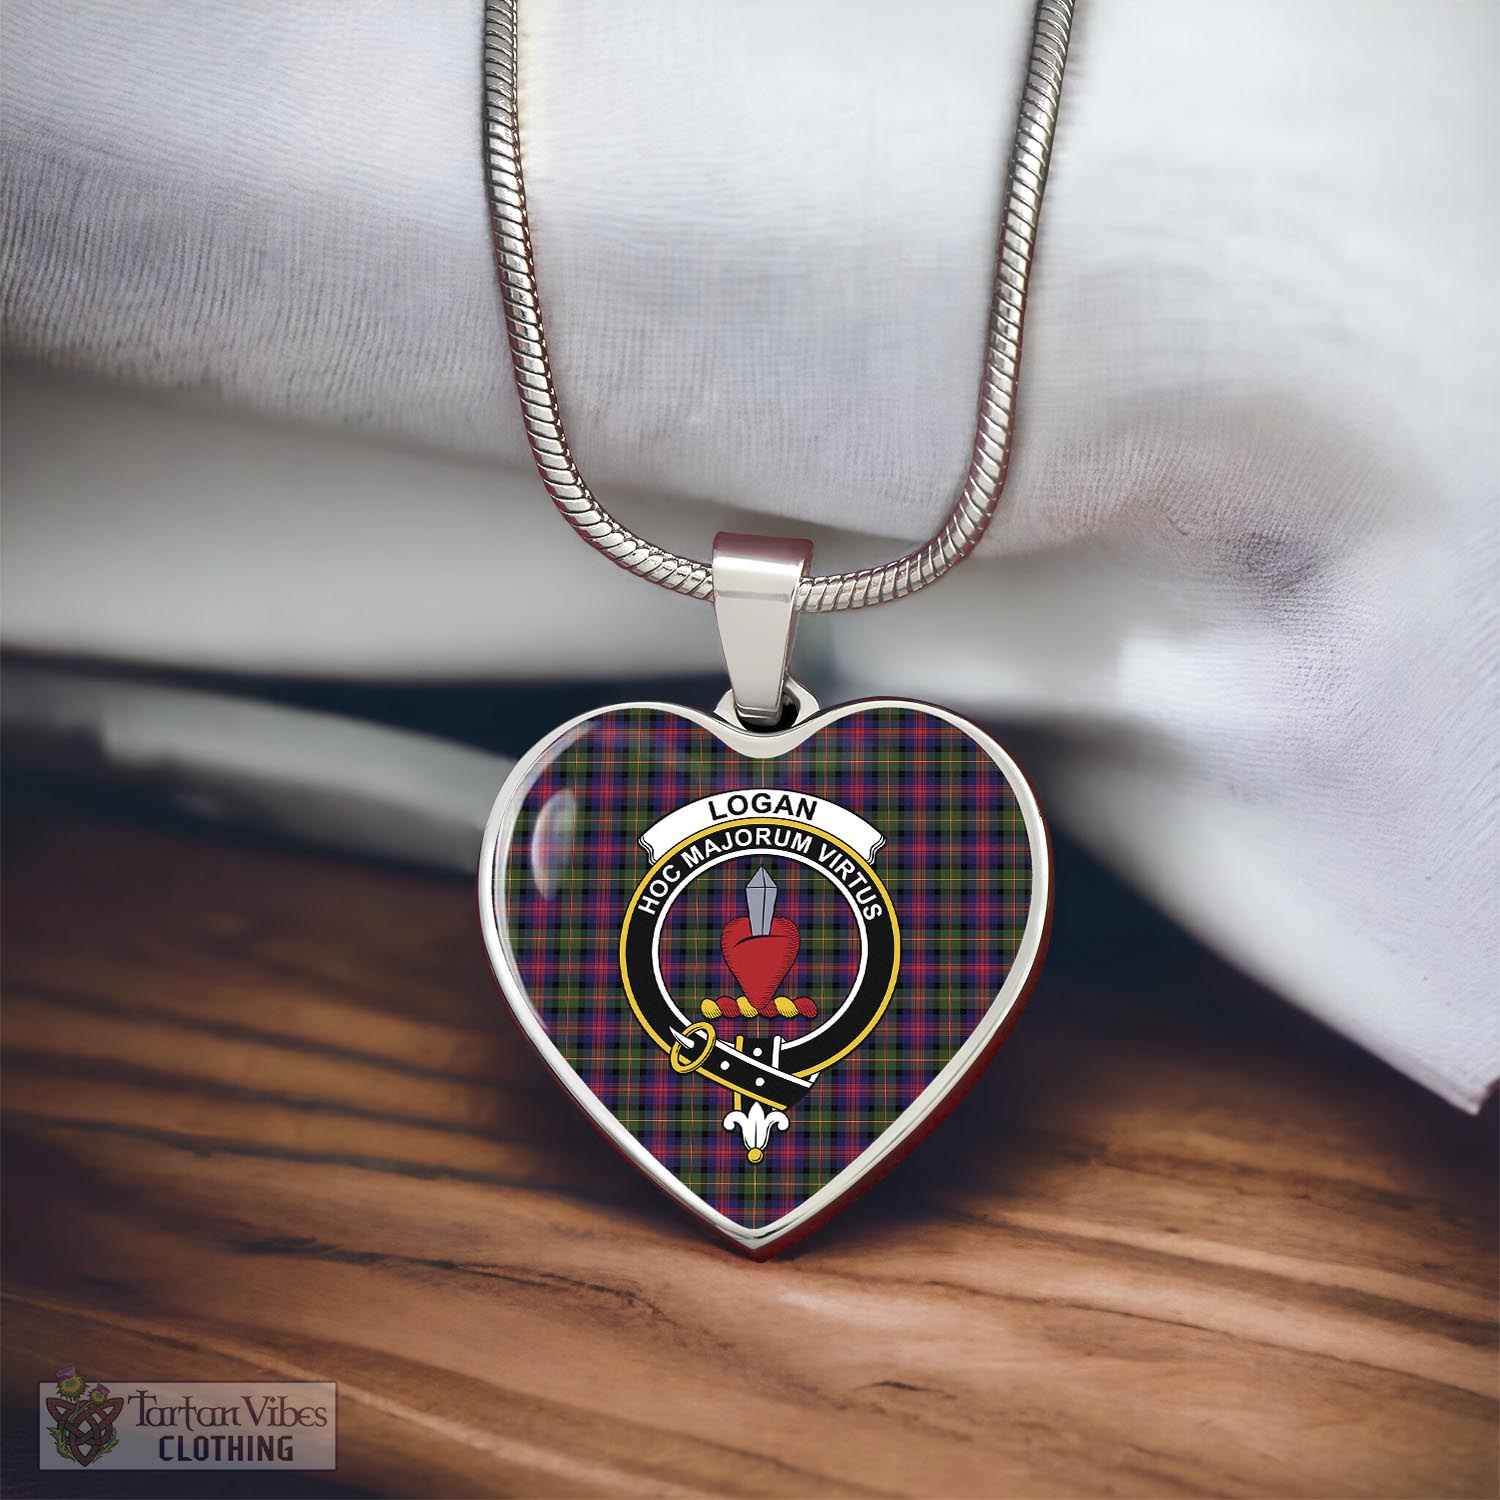 Tartan Vibes Clothing Logan Modern Tartan Heart Necklace with Family Crest